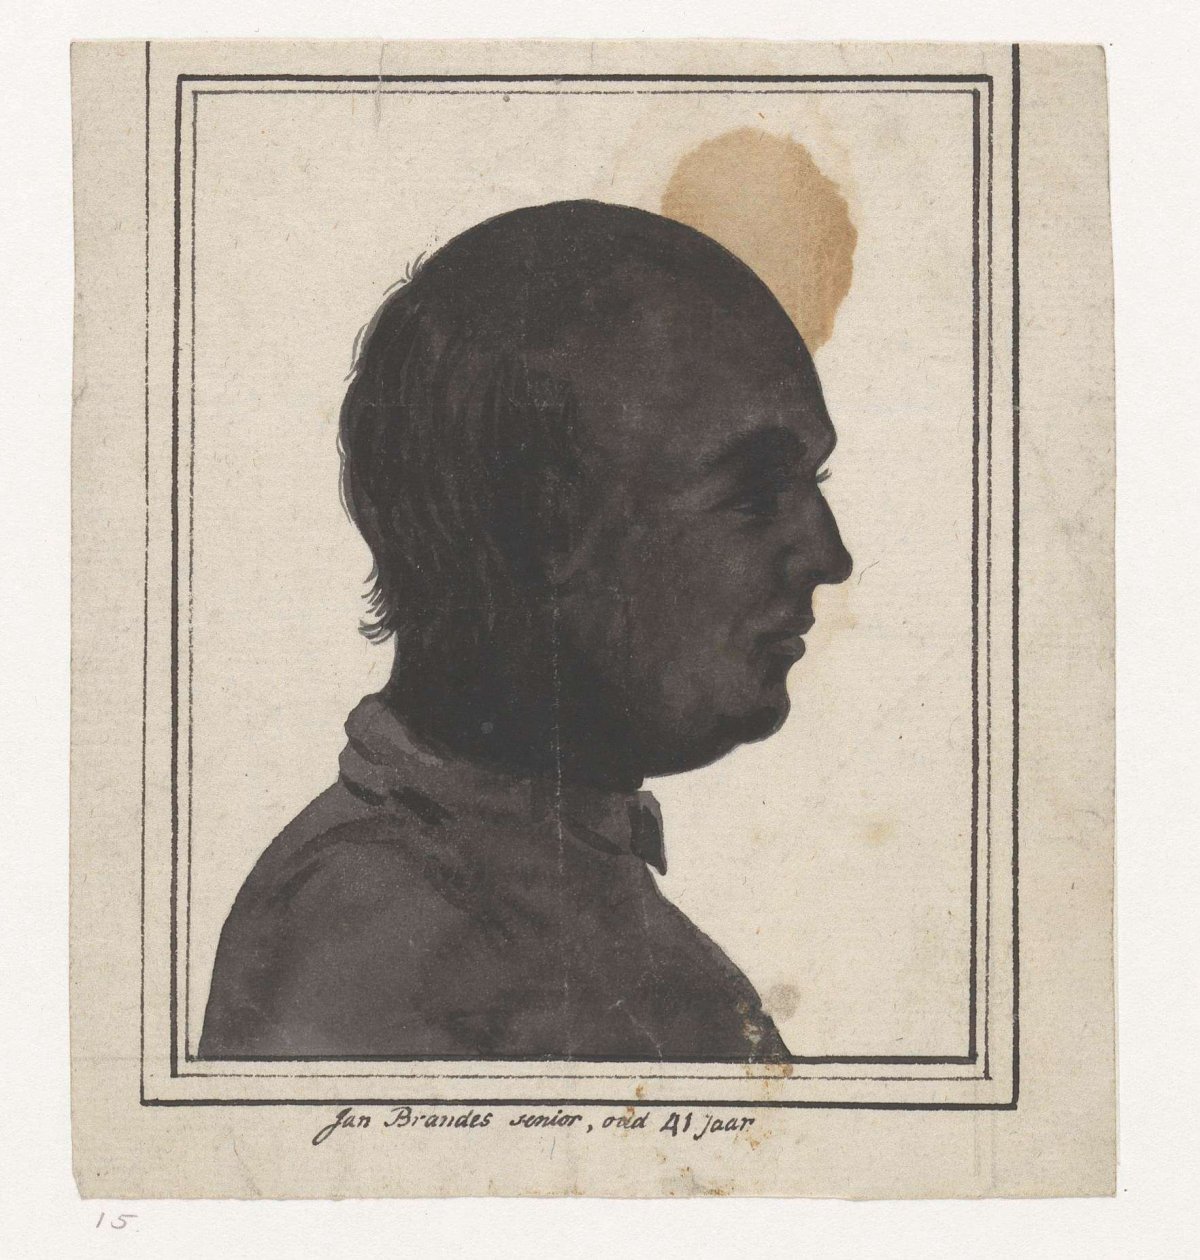 Silhouette portrait of Jan Brandes, Jan Brandes, 1784 - 1785